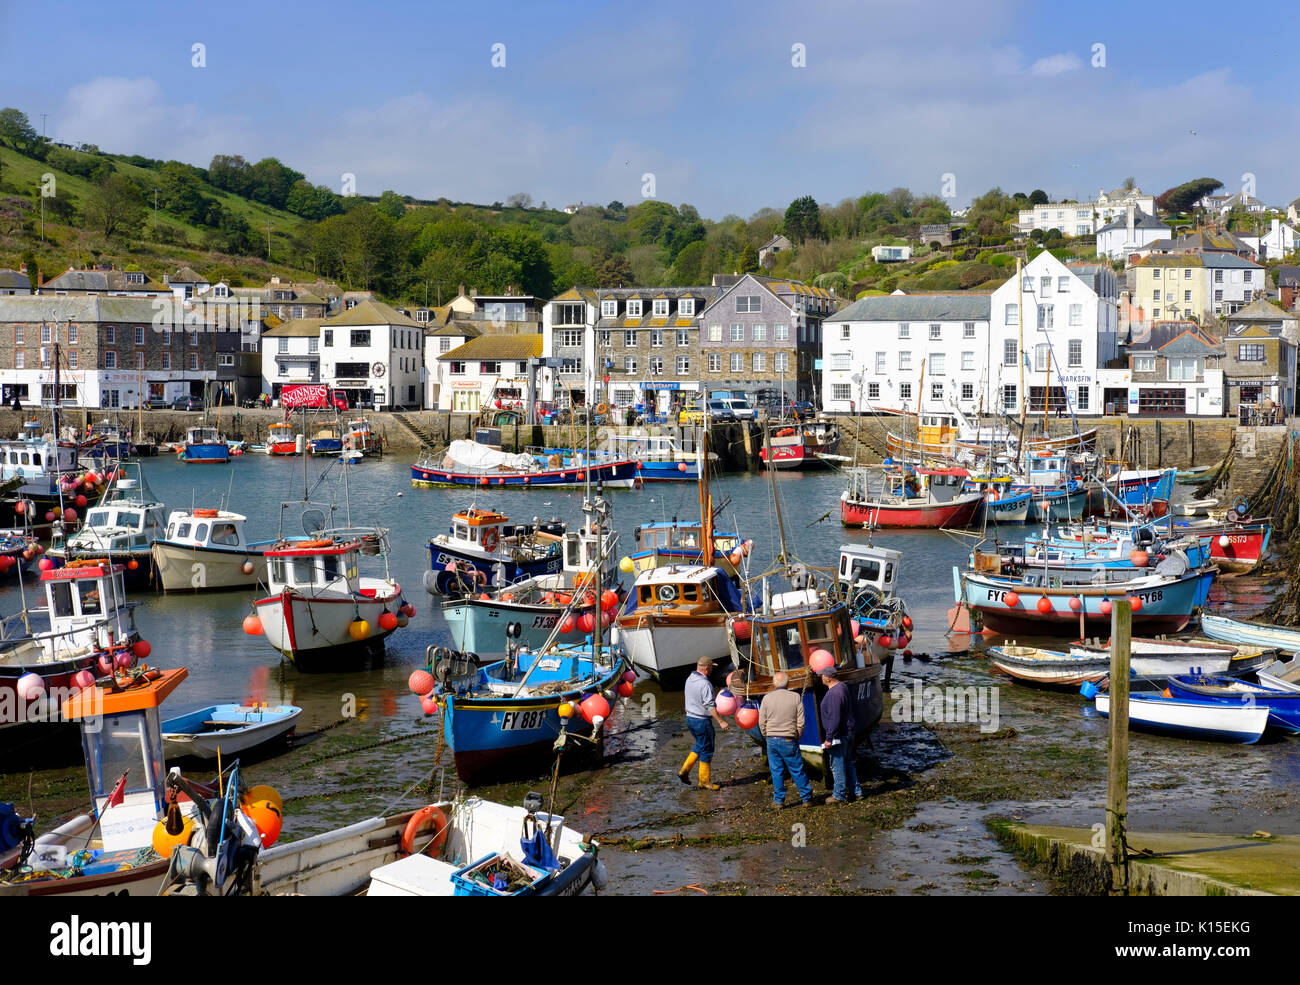 Port de pêche, Mevagissey, Cornwall, Angleterre, Royaume-Uni Banque D'Images